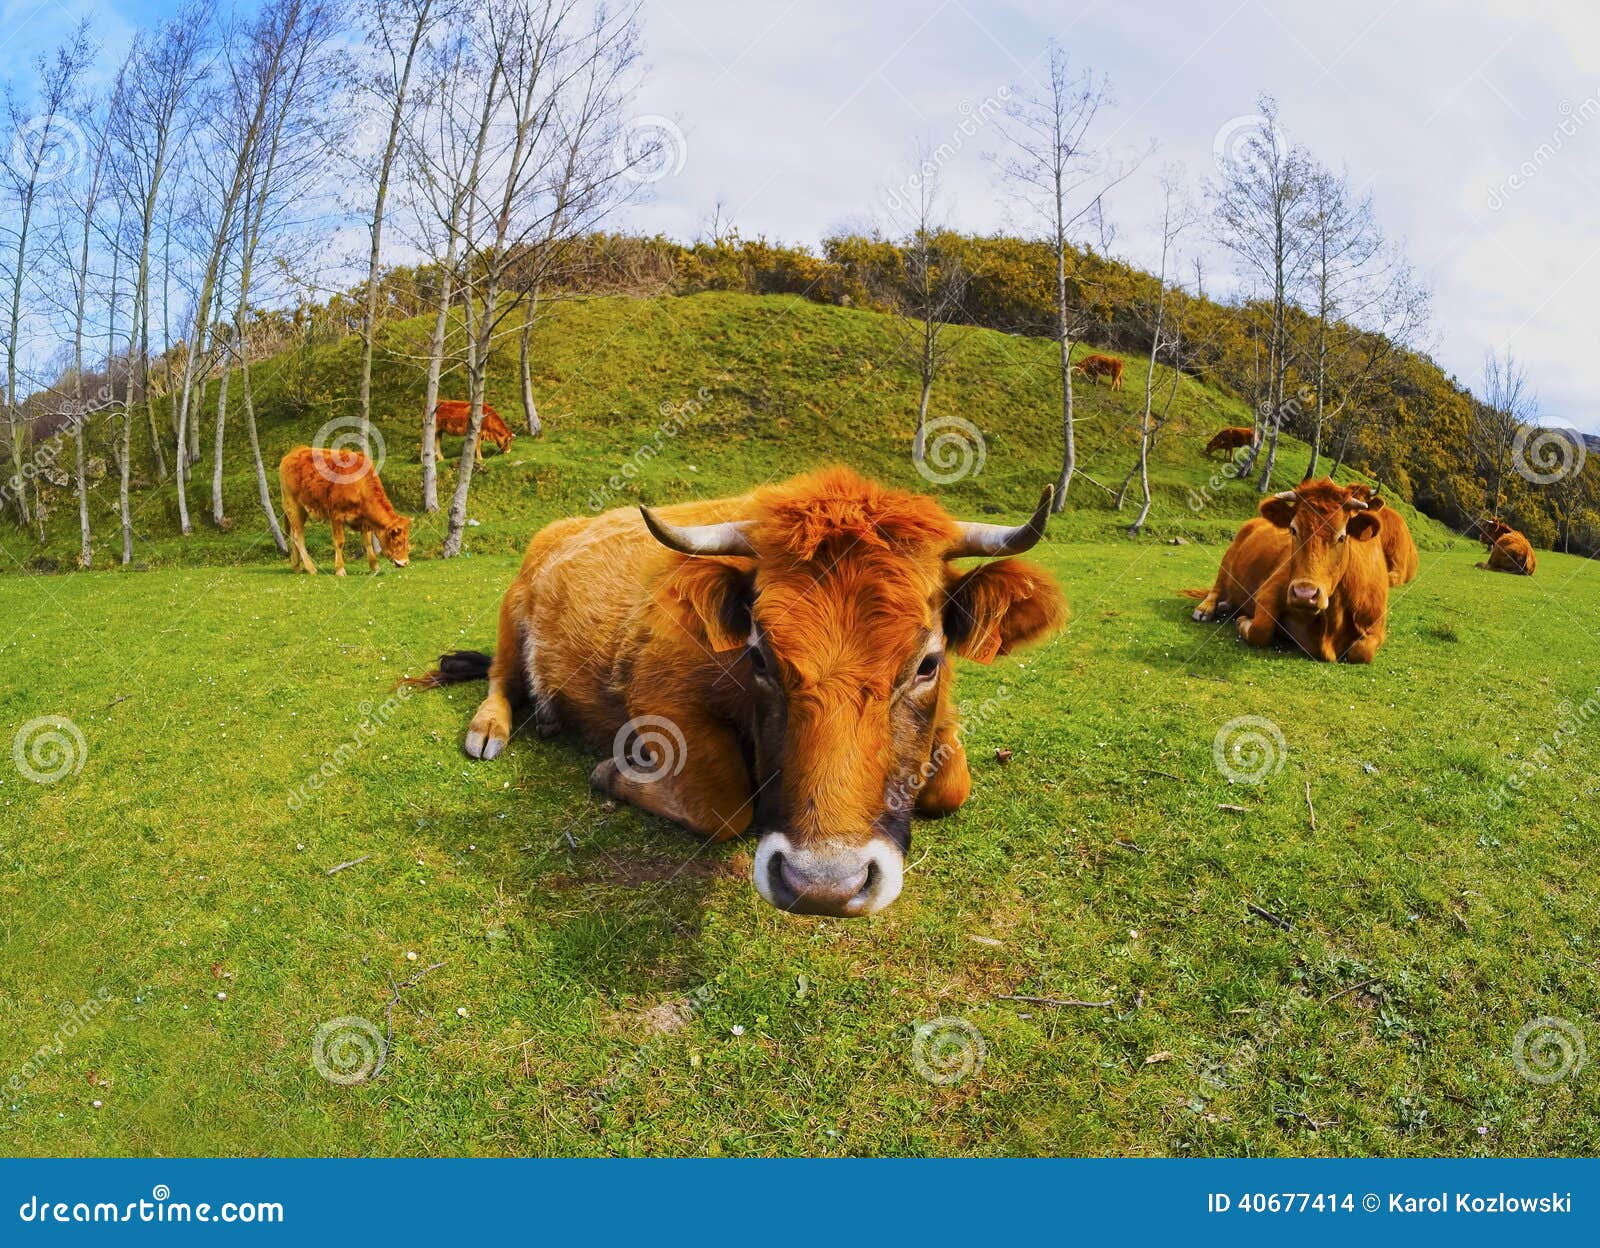 brown cows in la arboleda near bilbao